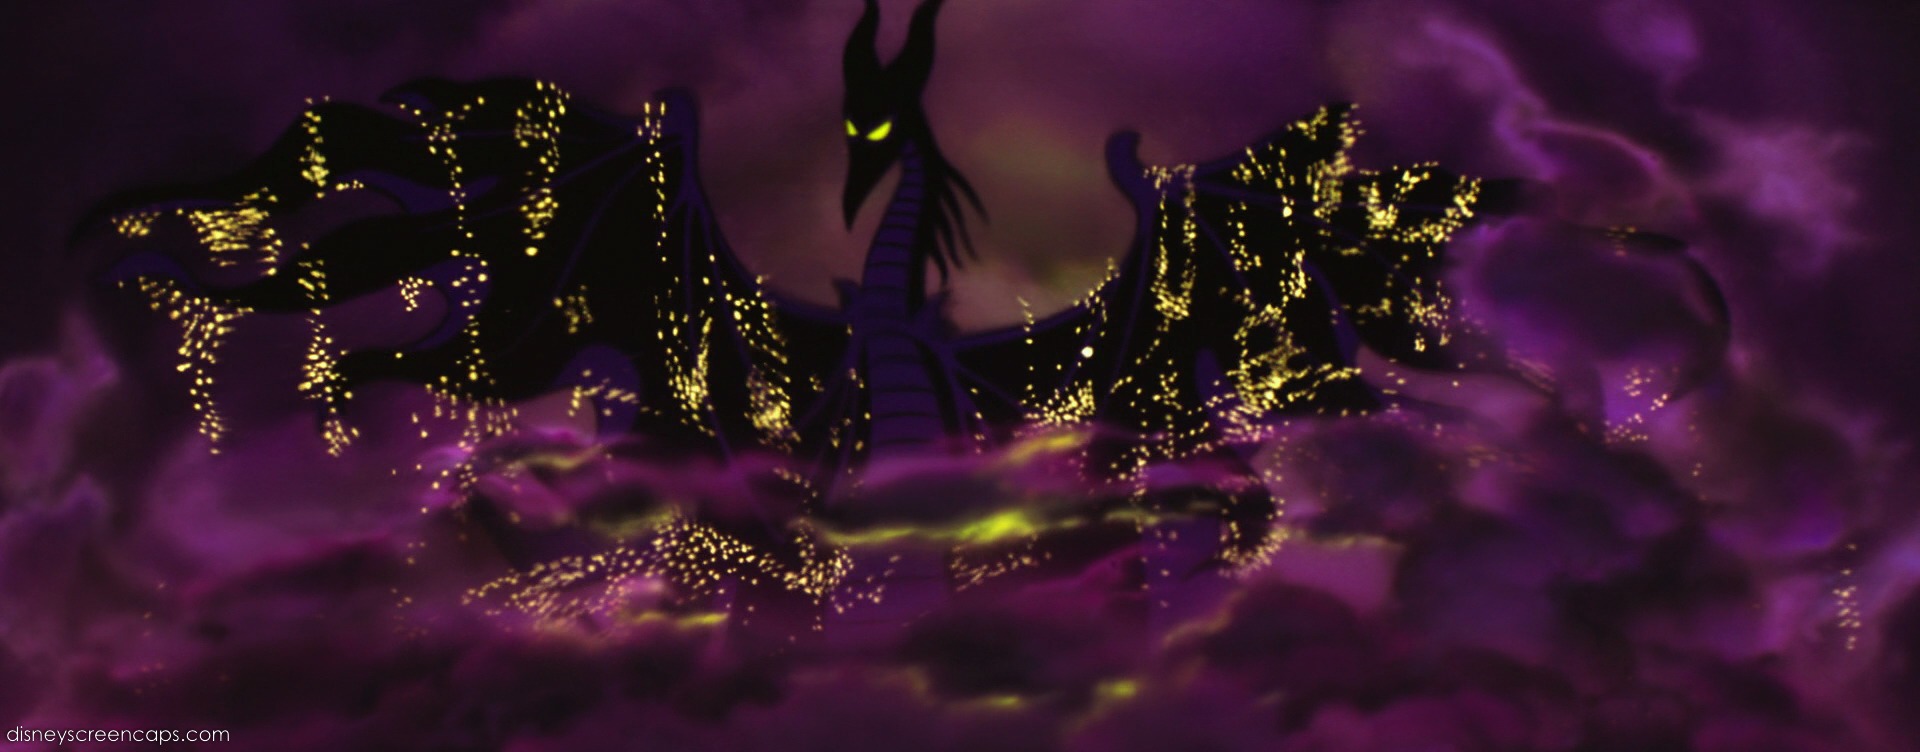 Maleficent Disney Synopsis Villains Wiki Fandom Powered By Wikia